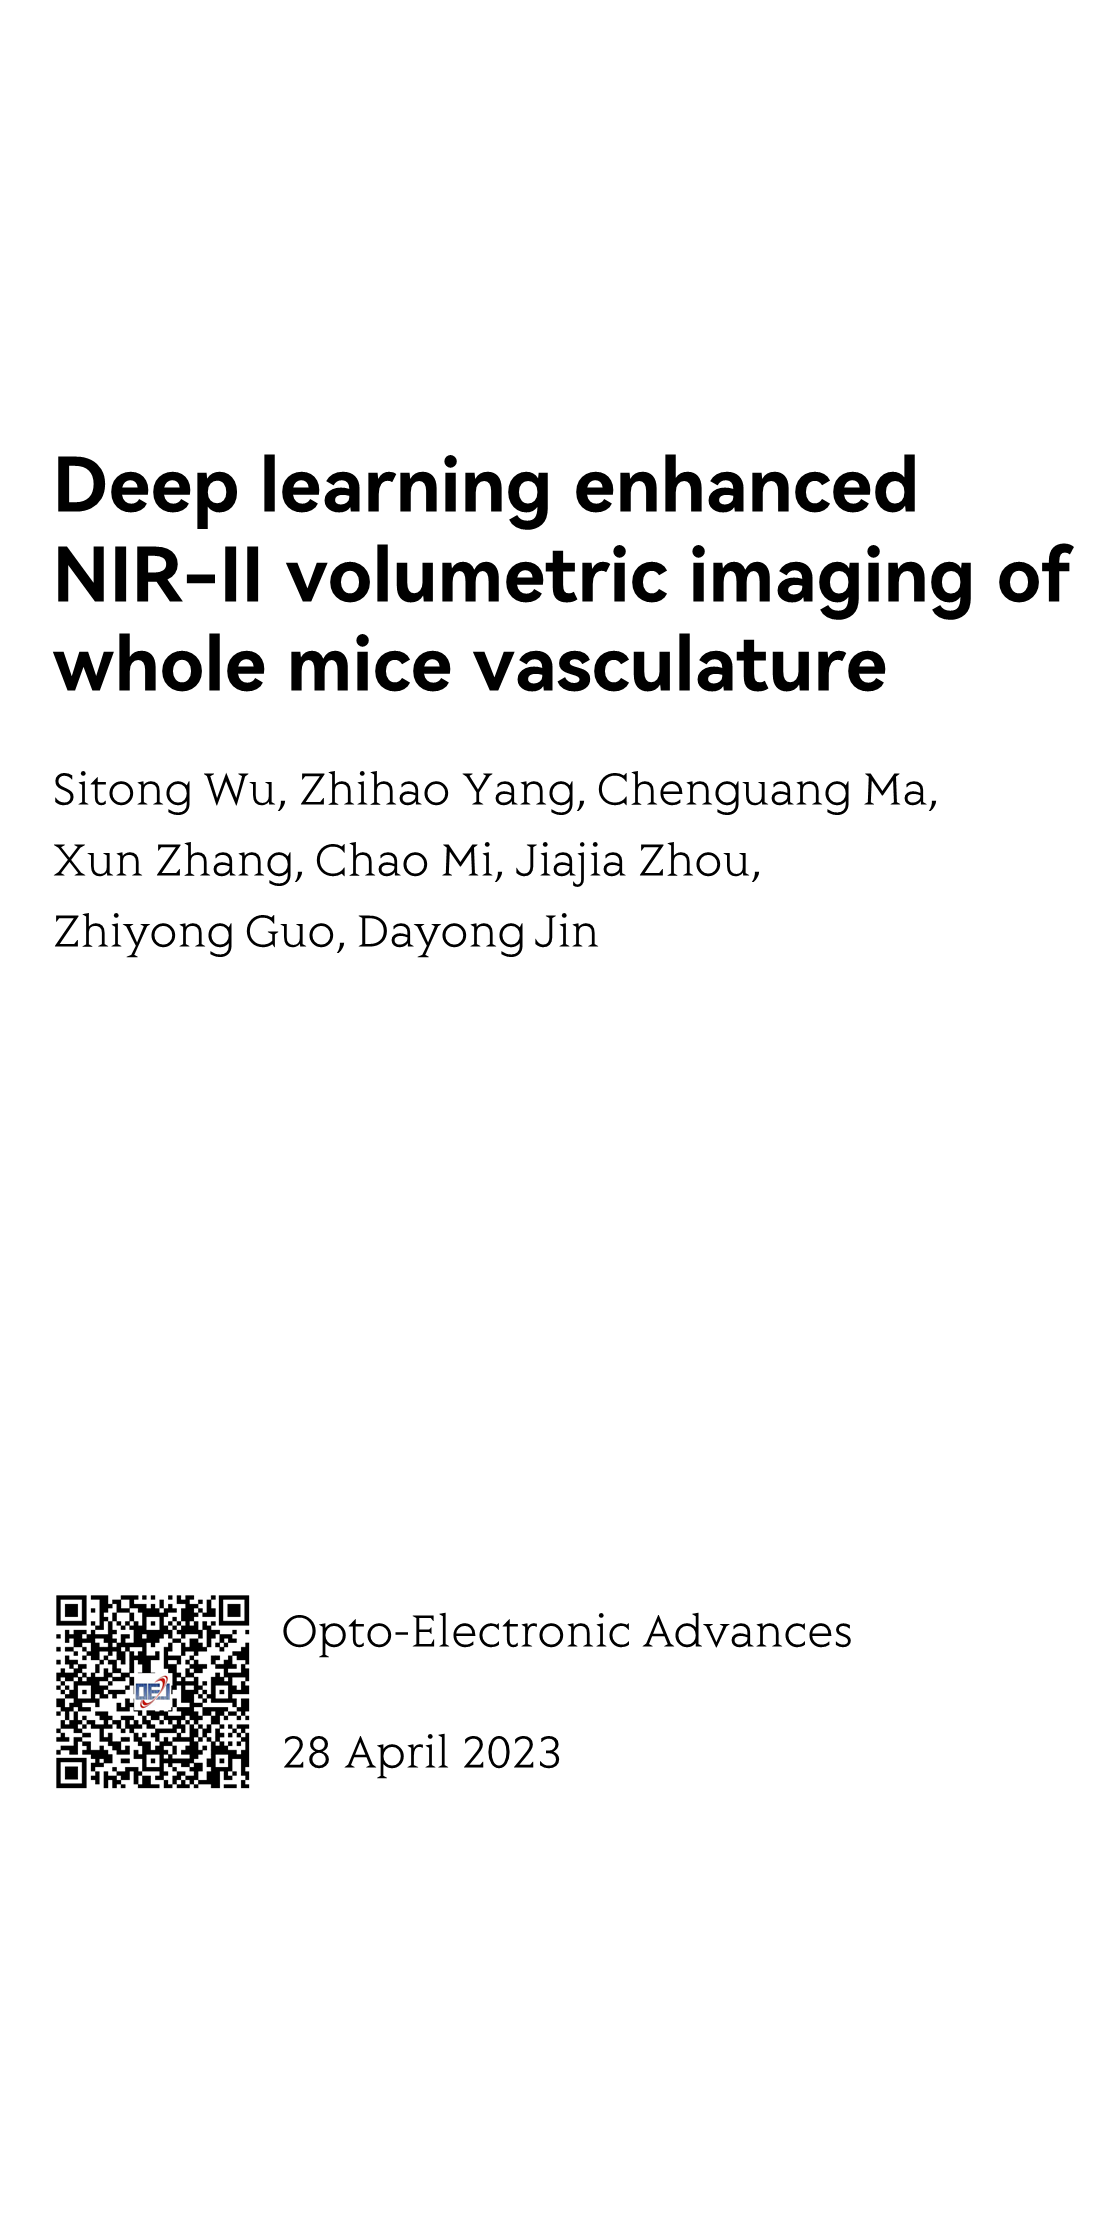 Deep learning enhanced NIR-II volumetric imaging of whole mice vasculature_1